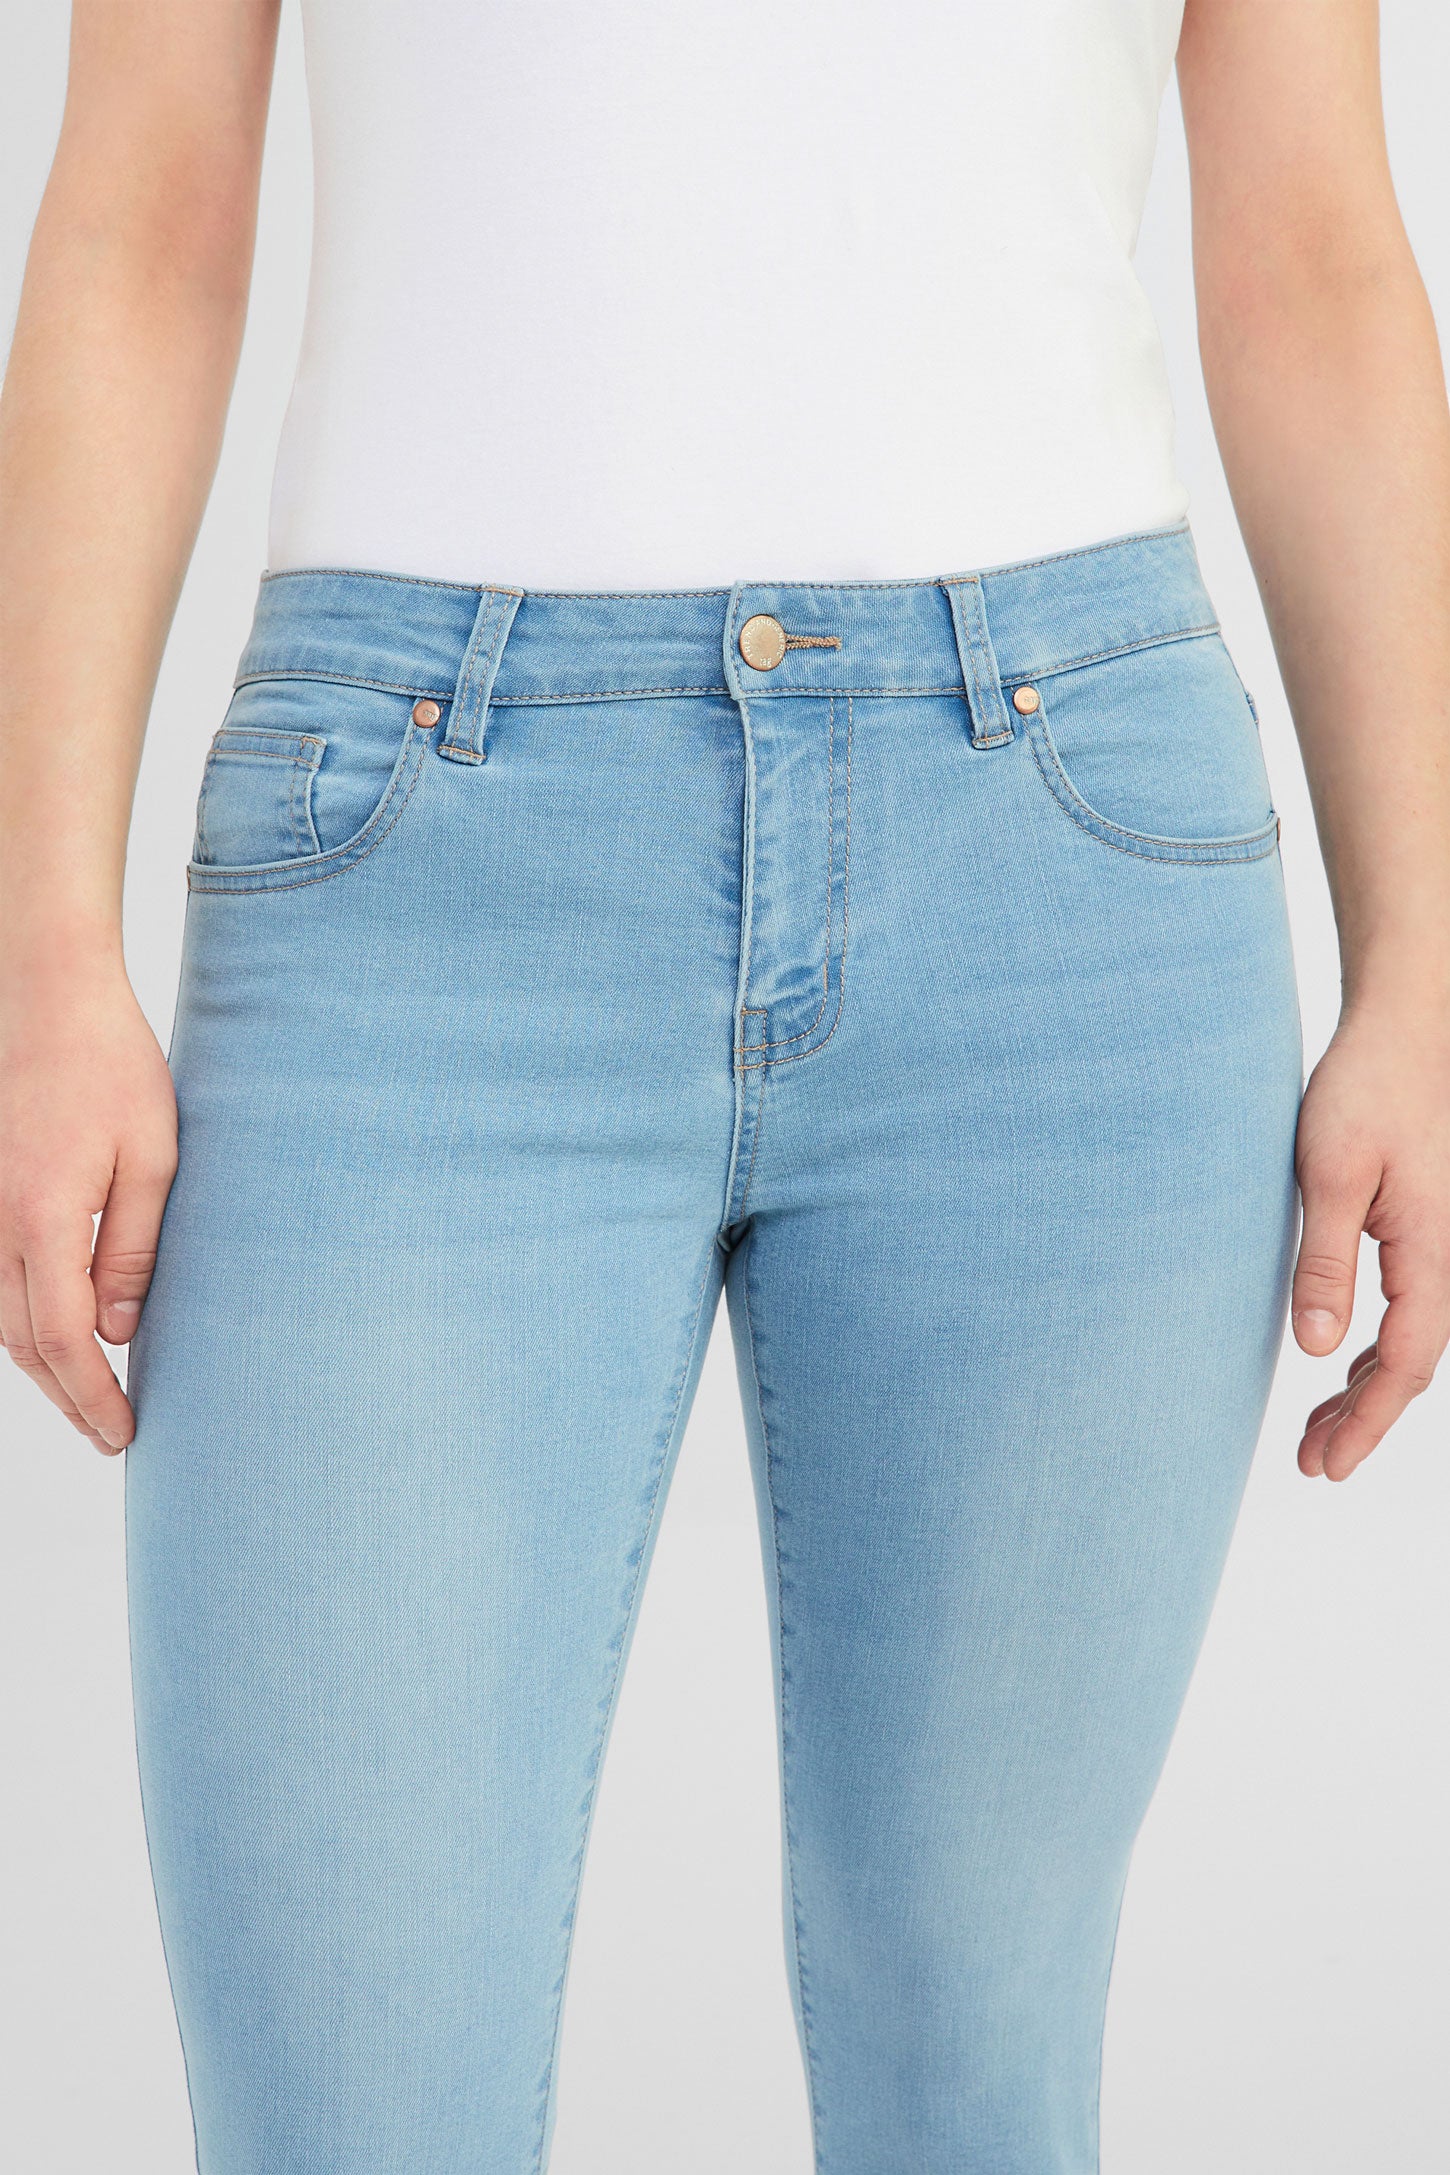 Capri 5 poches en jeans - Femme && BLEU CLAIR